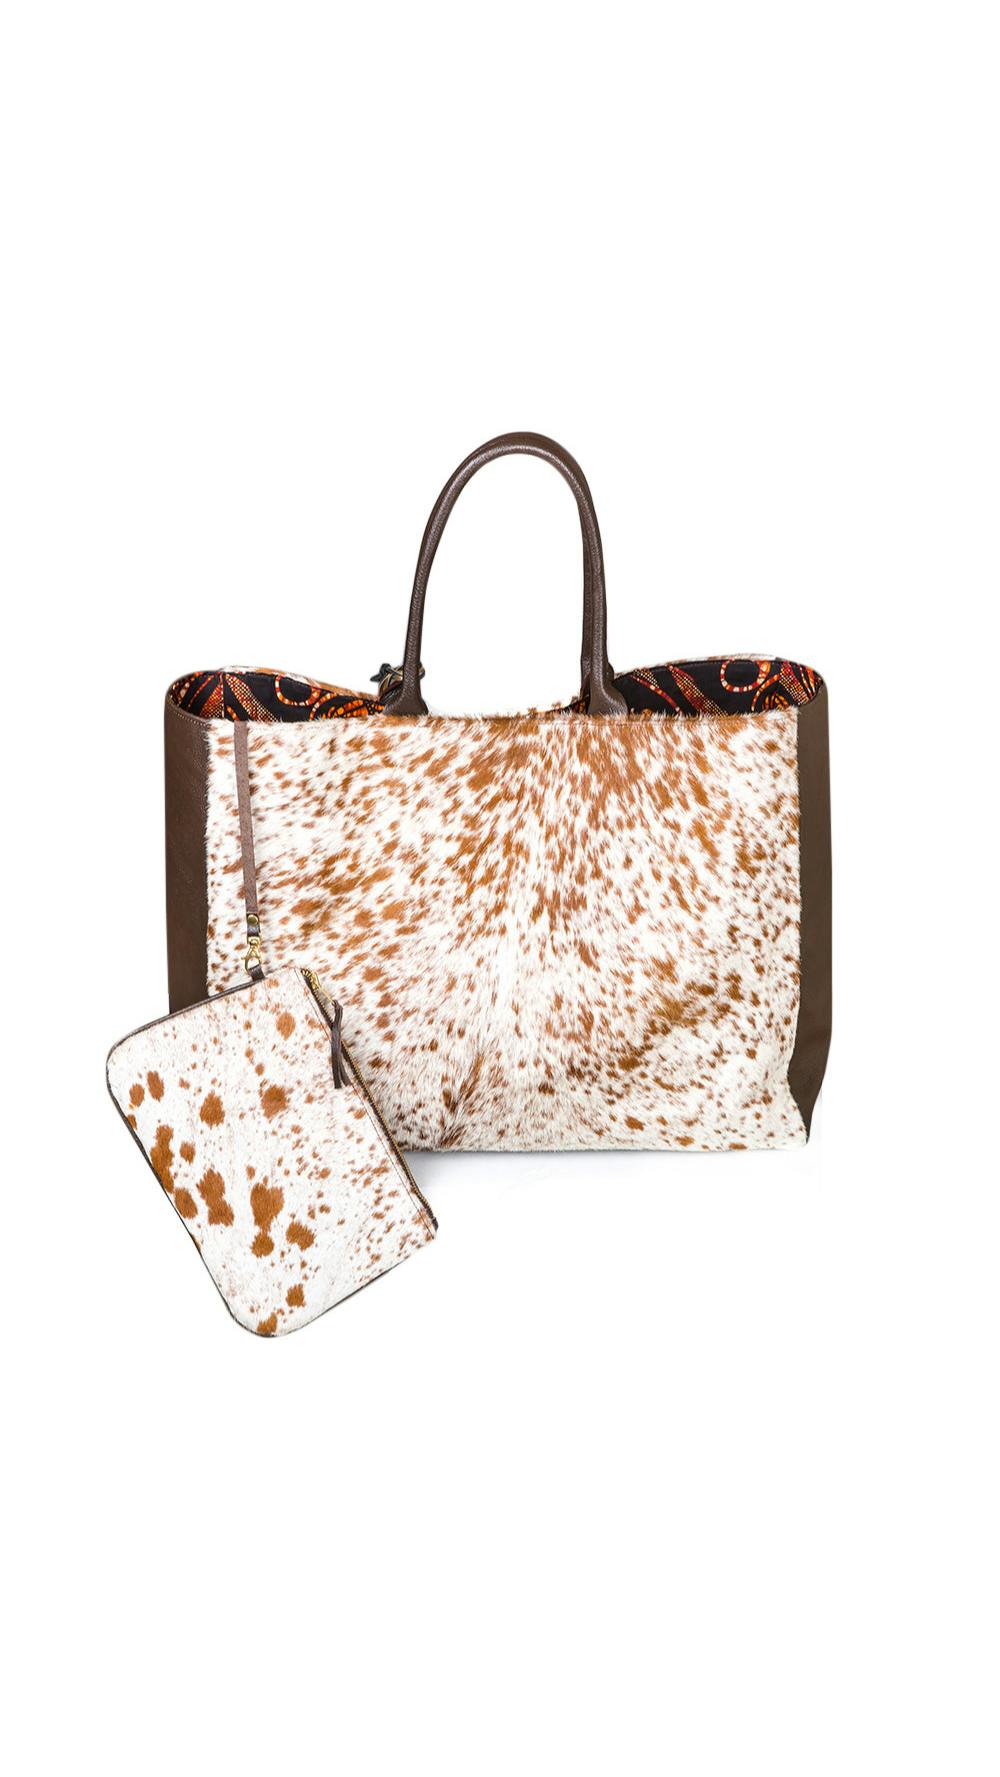 Stefania Hide Bag, a product by Adele Dejak